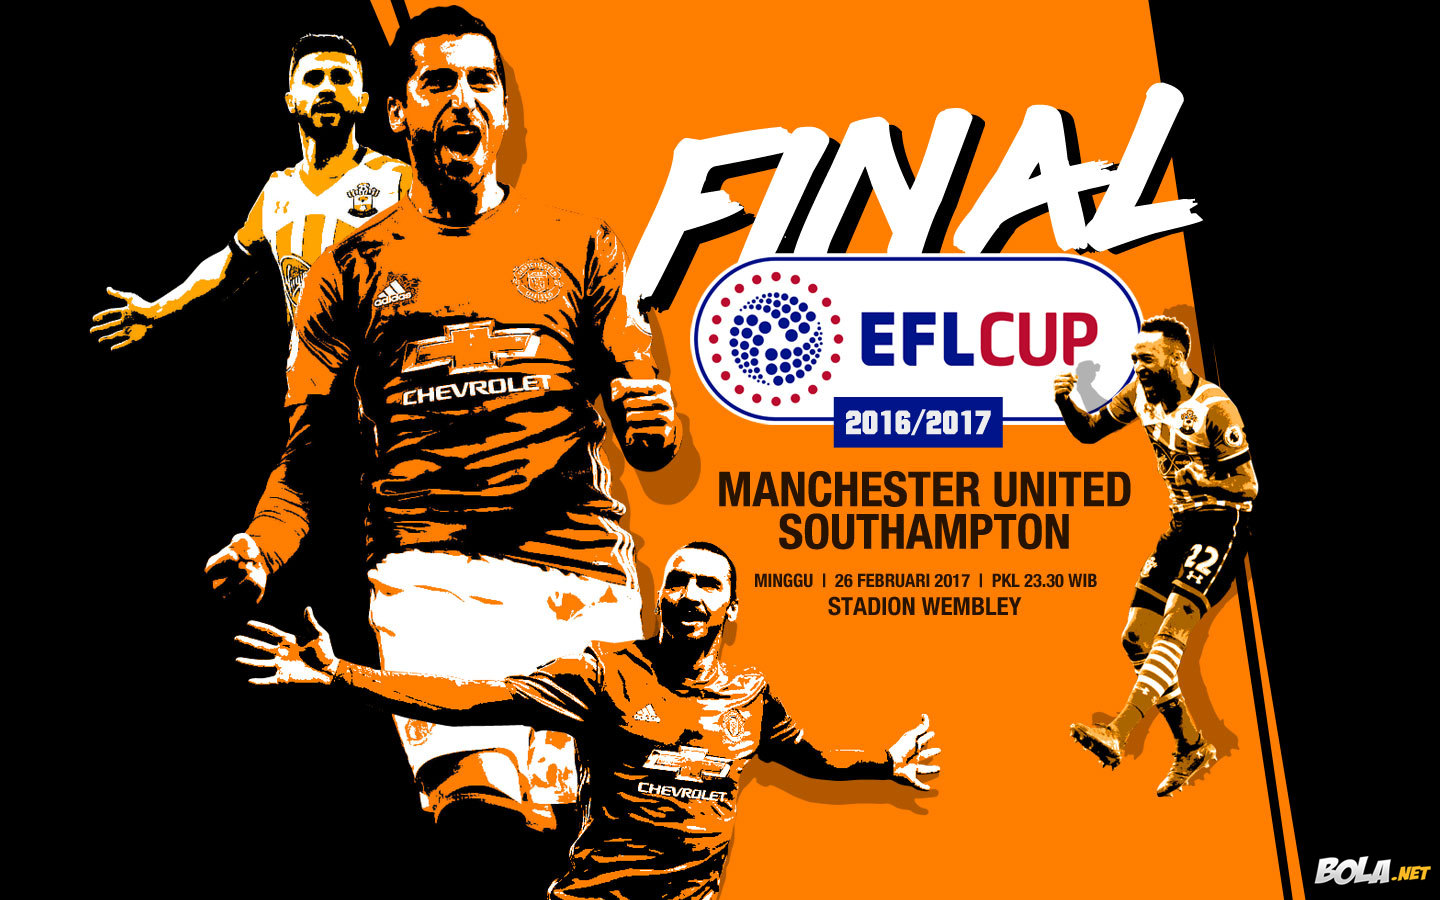 Deskripsi : Wallpaper Final Efl Cup 2016/2017, size: 1440x900